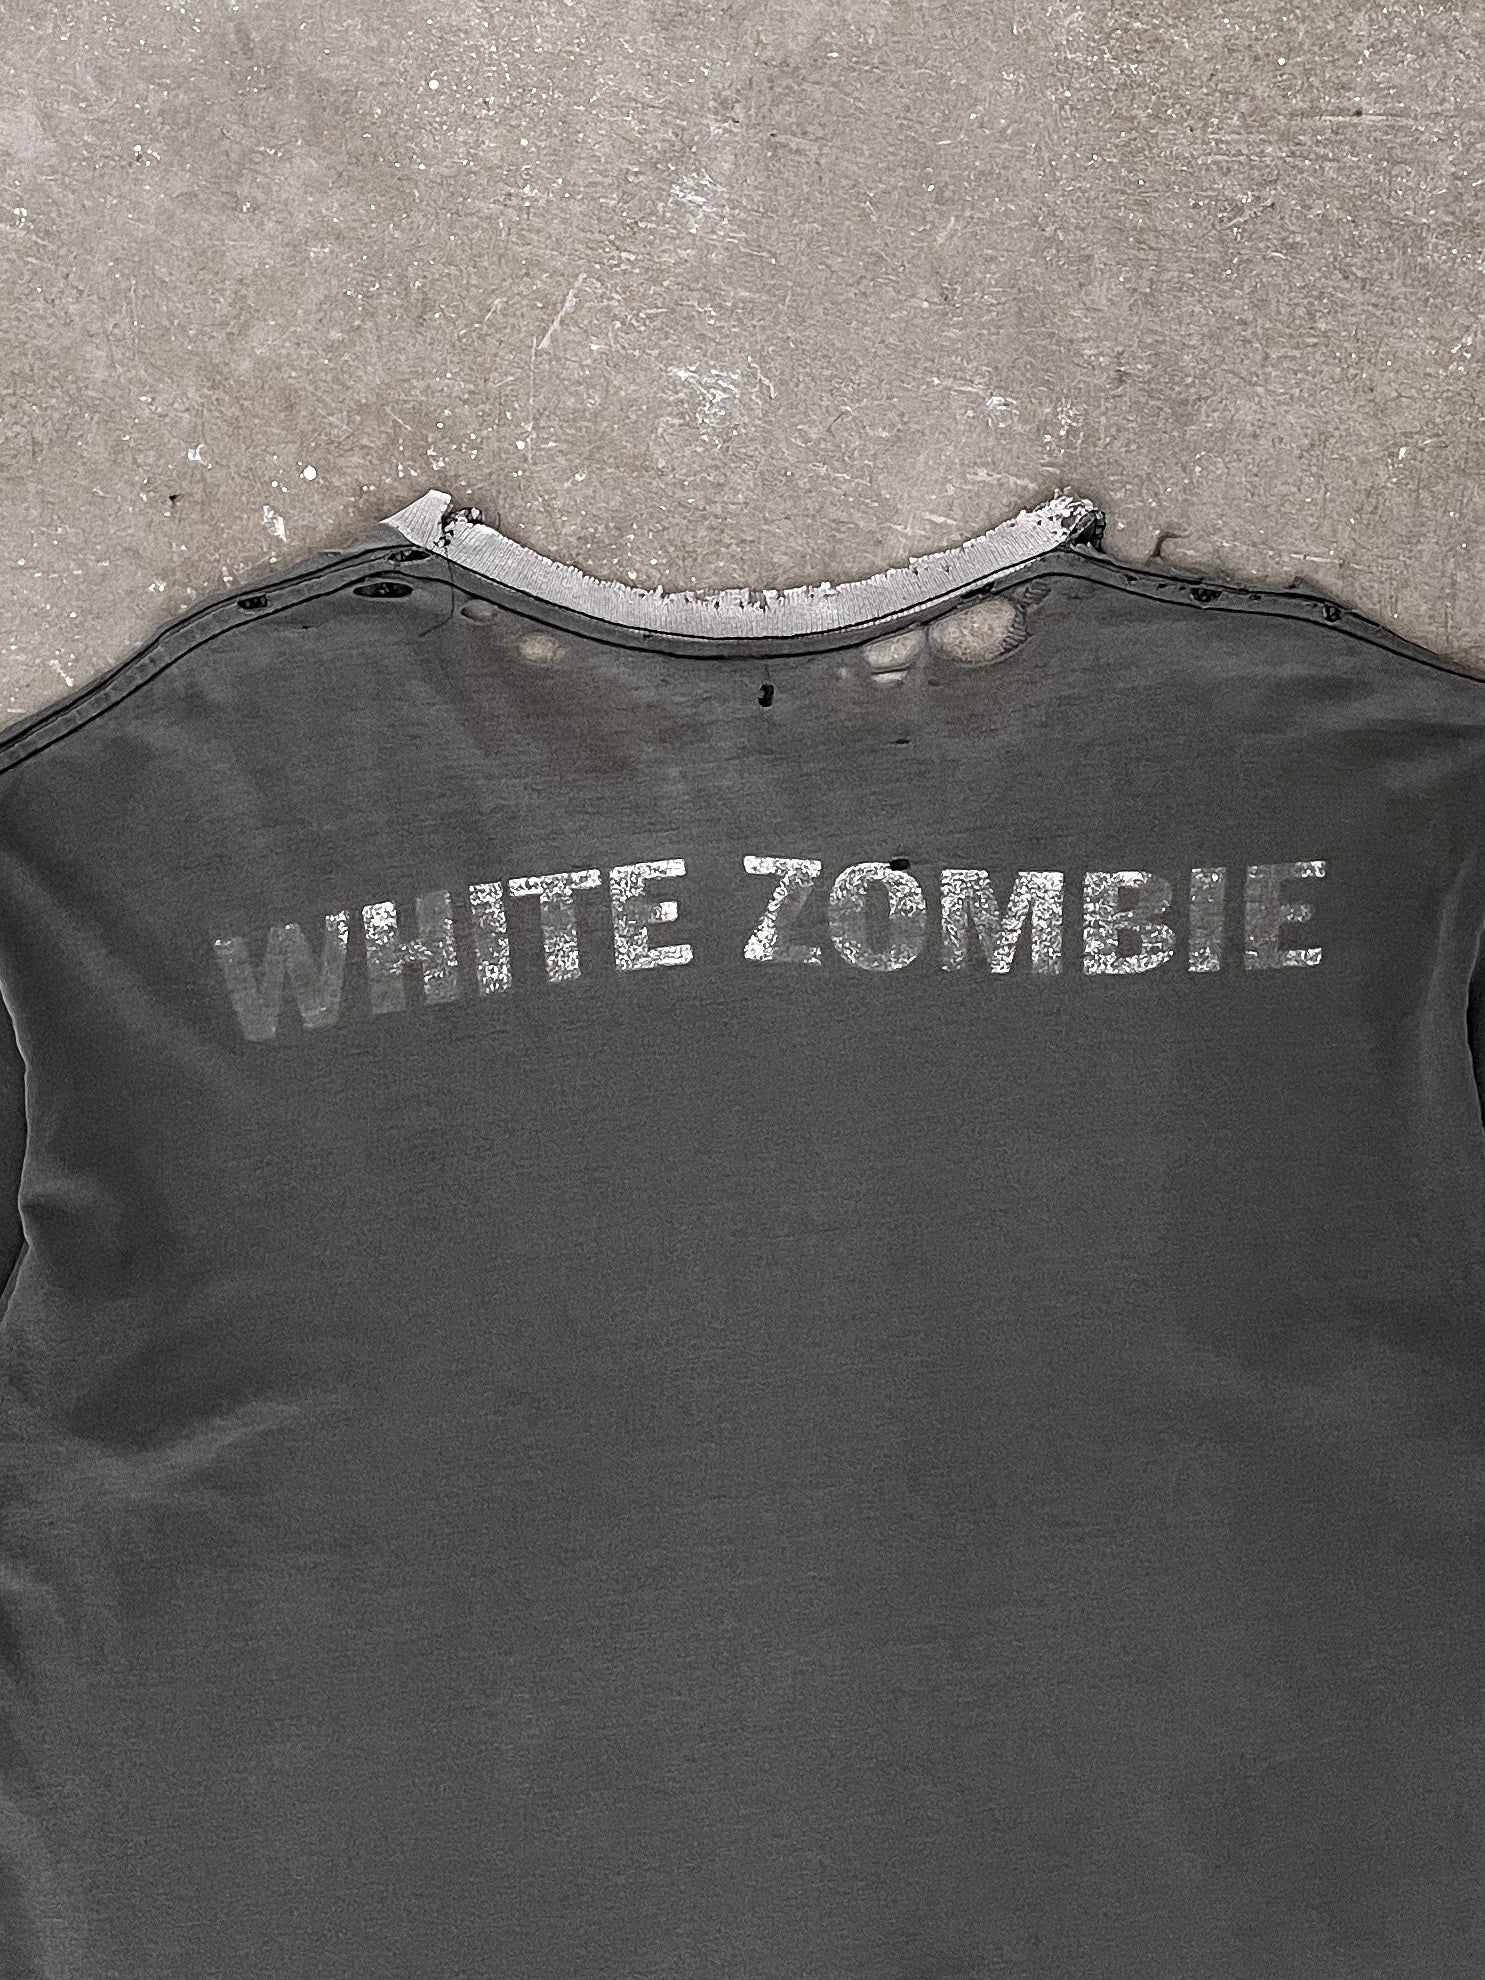 1990s White Zombie “Freakazoid” Sun Faded Band Tee (L)